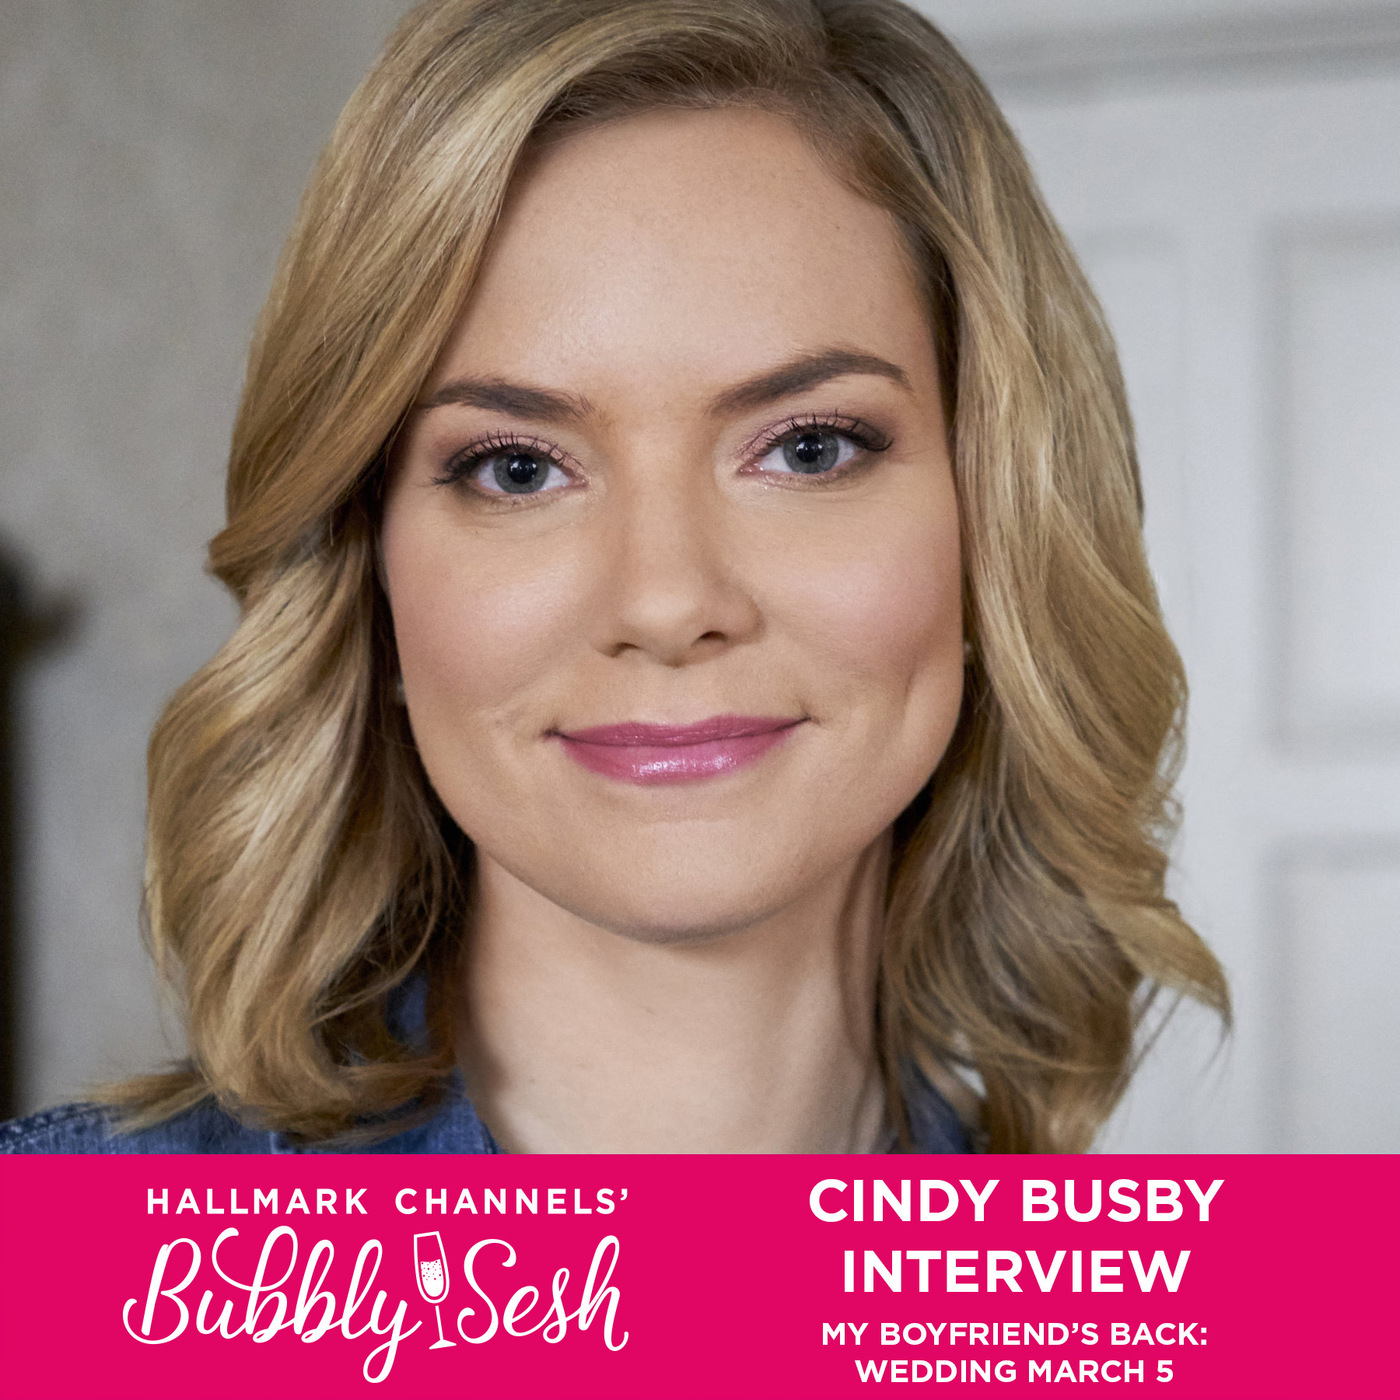 Cindy Busby Interview: My Boyfriend’s Back - Wedding March 5 